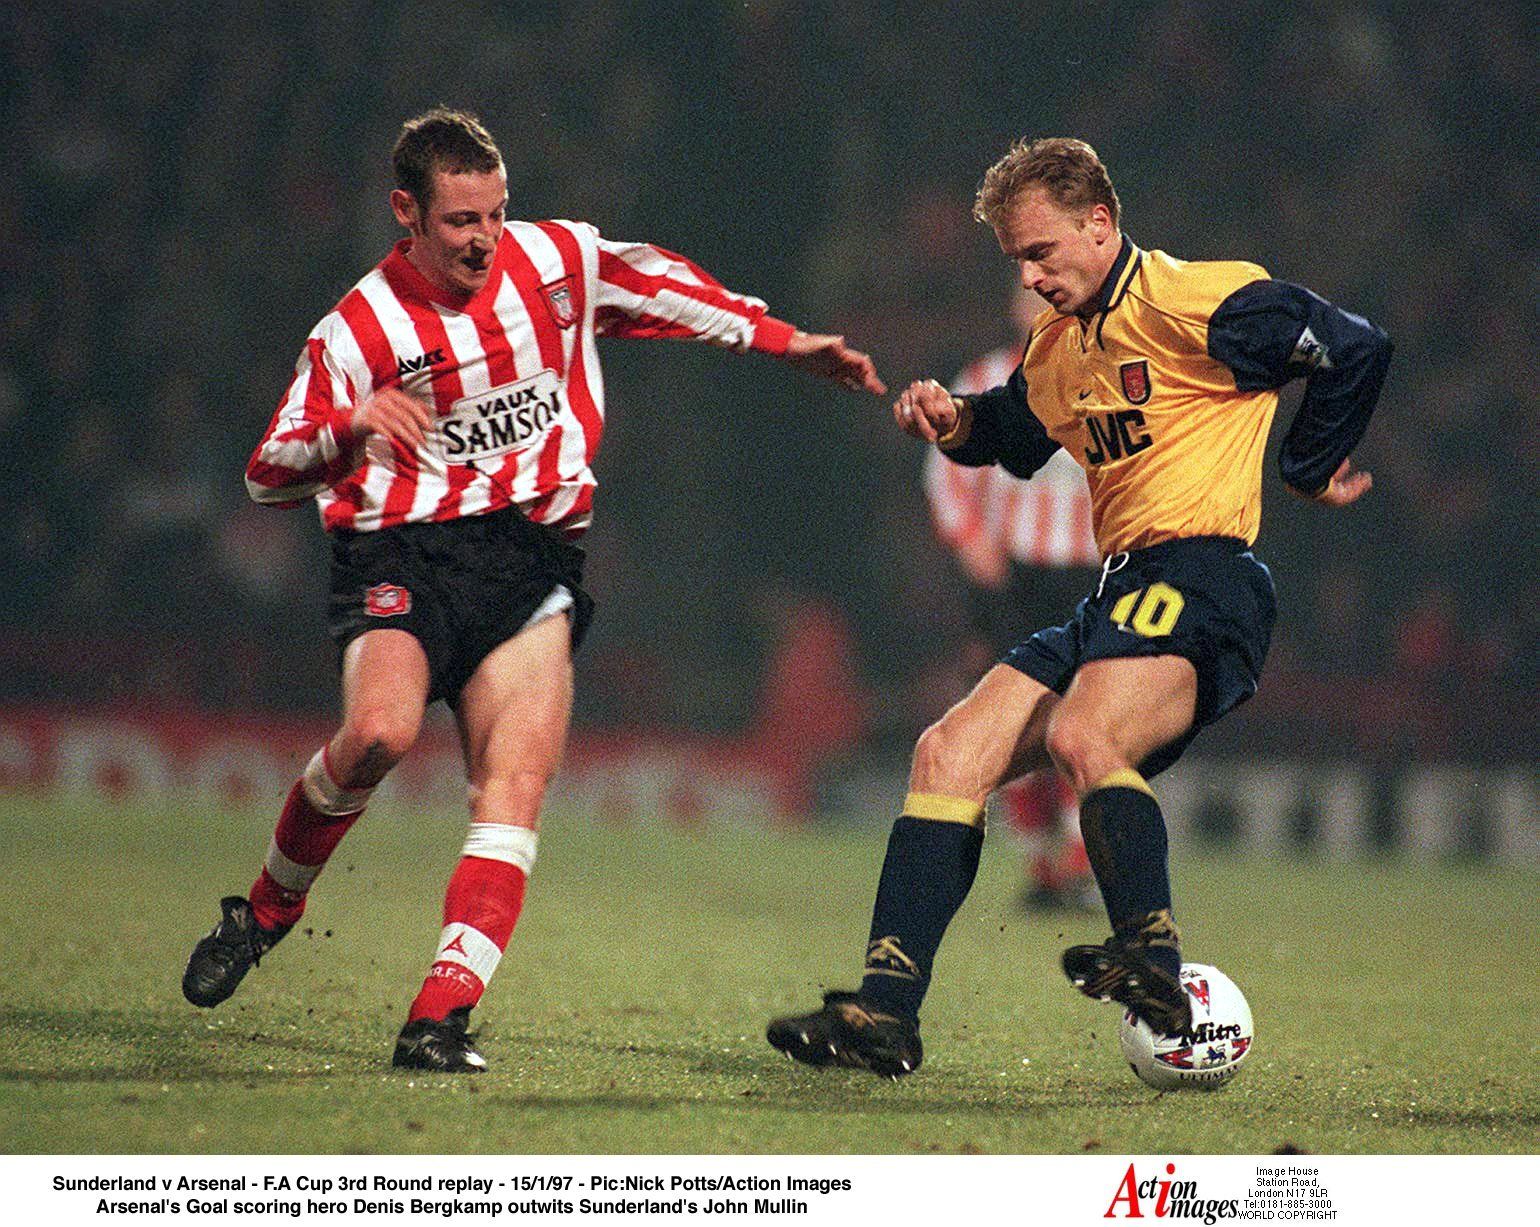 Sunderland v Arsenal - FA Cup  3rd Round replay - 15/1/97 - Pic:Nick Potts/Action Images 
Arsenal's Goal scoring hero Dennis Bergkamp outwits Sunderland's John Mullin